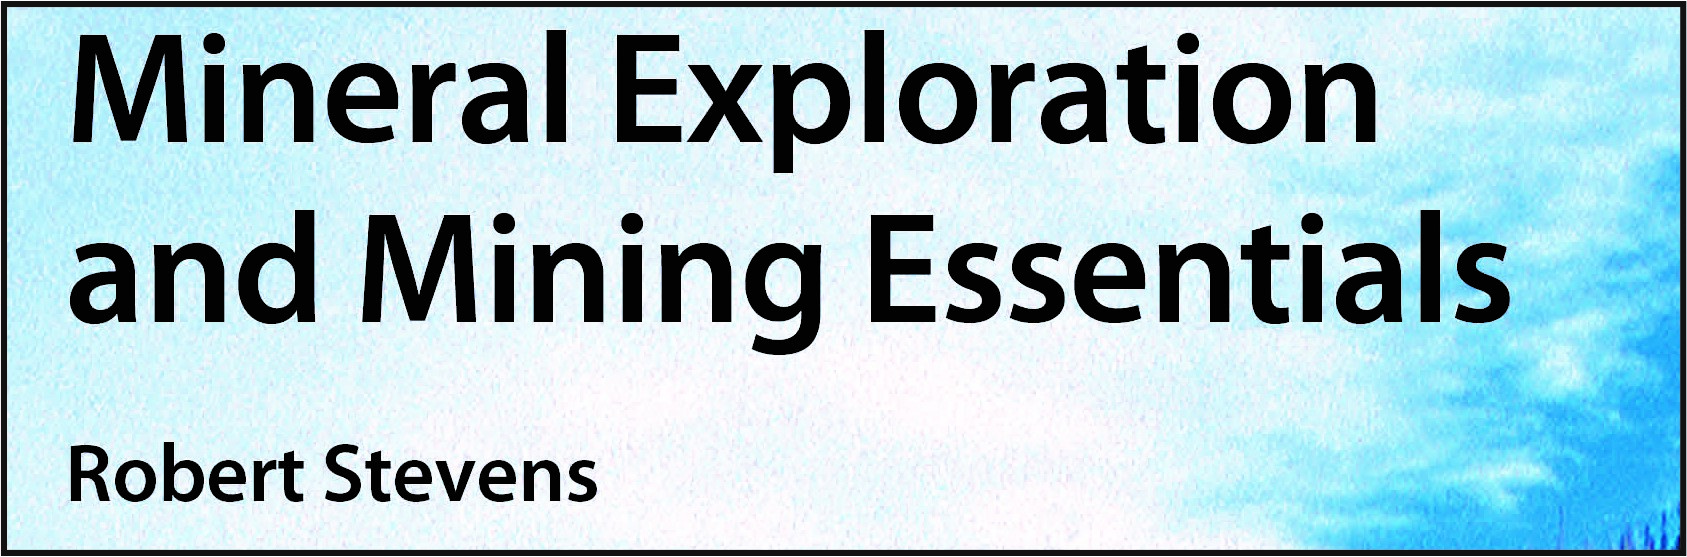 Mineral Exploration and Mining Essentials Logo